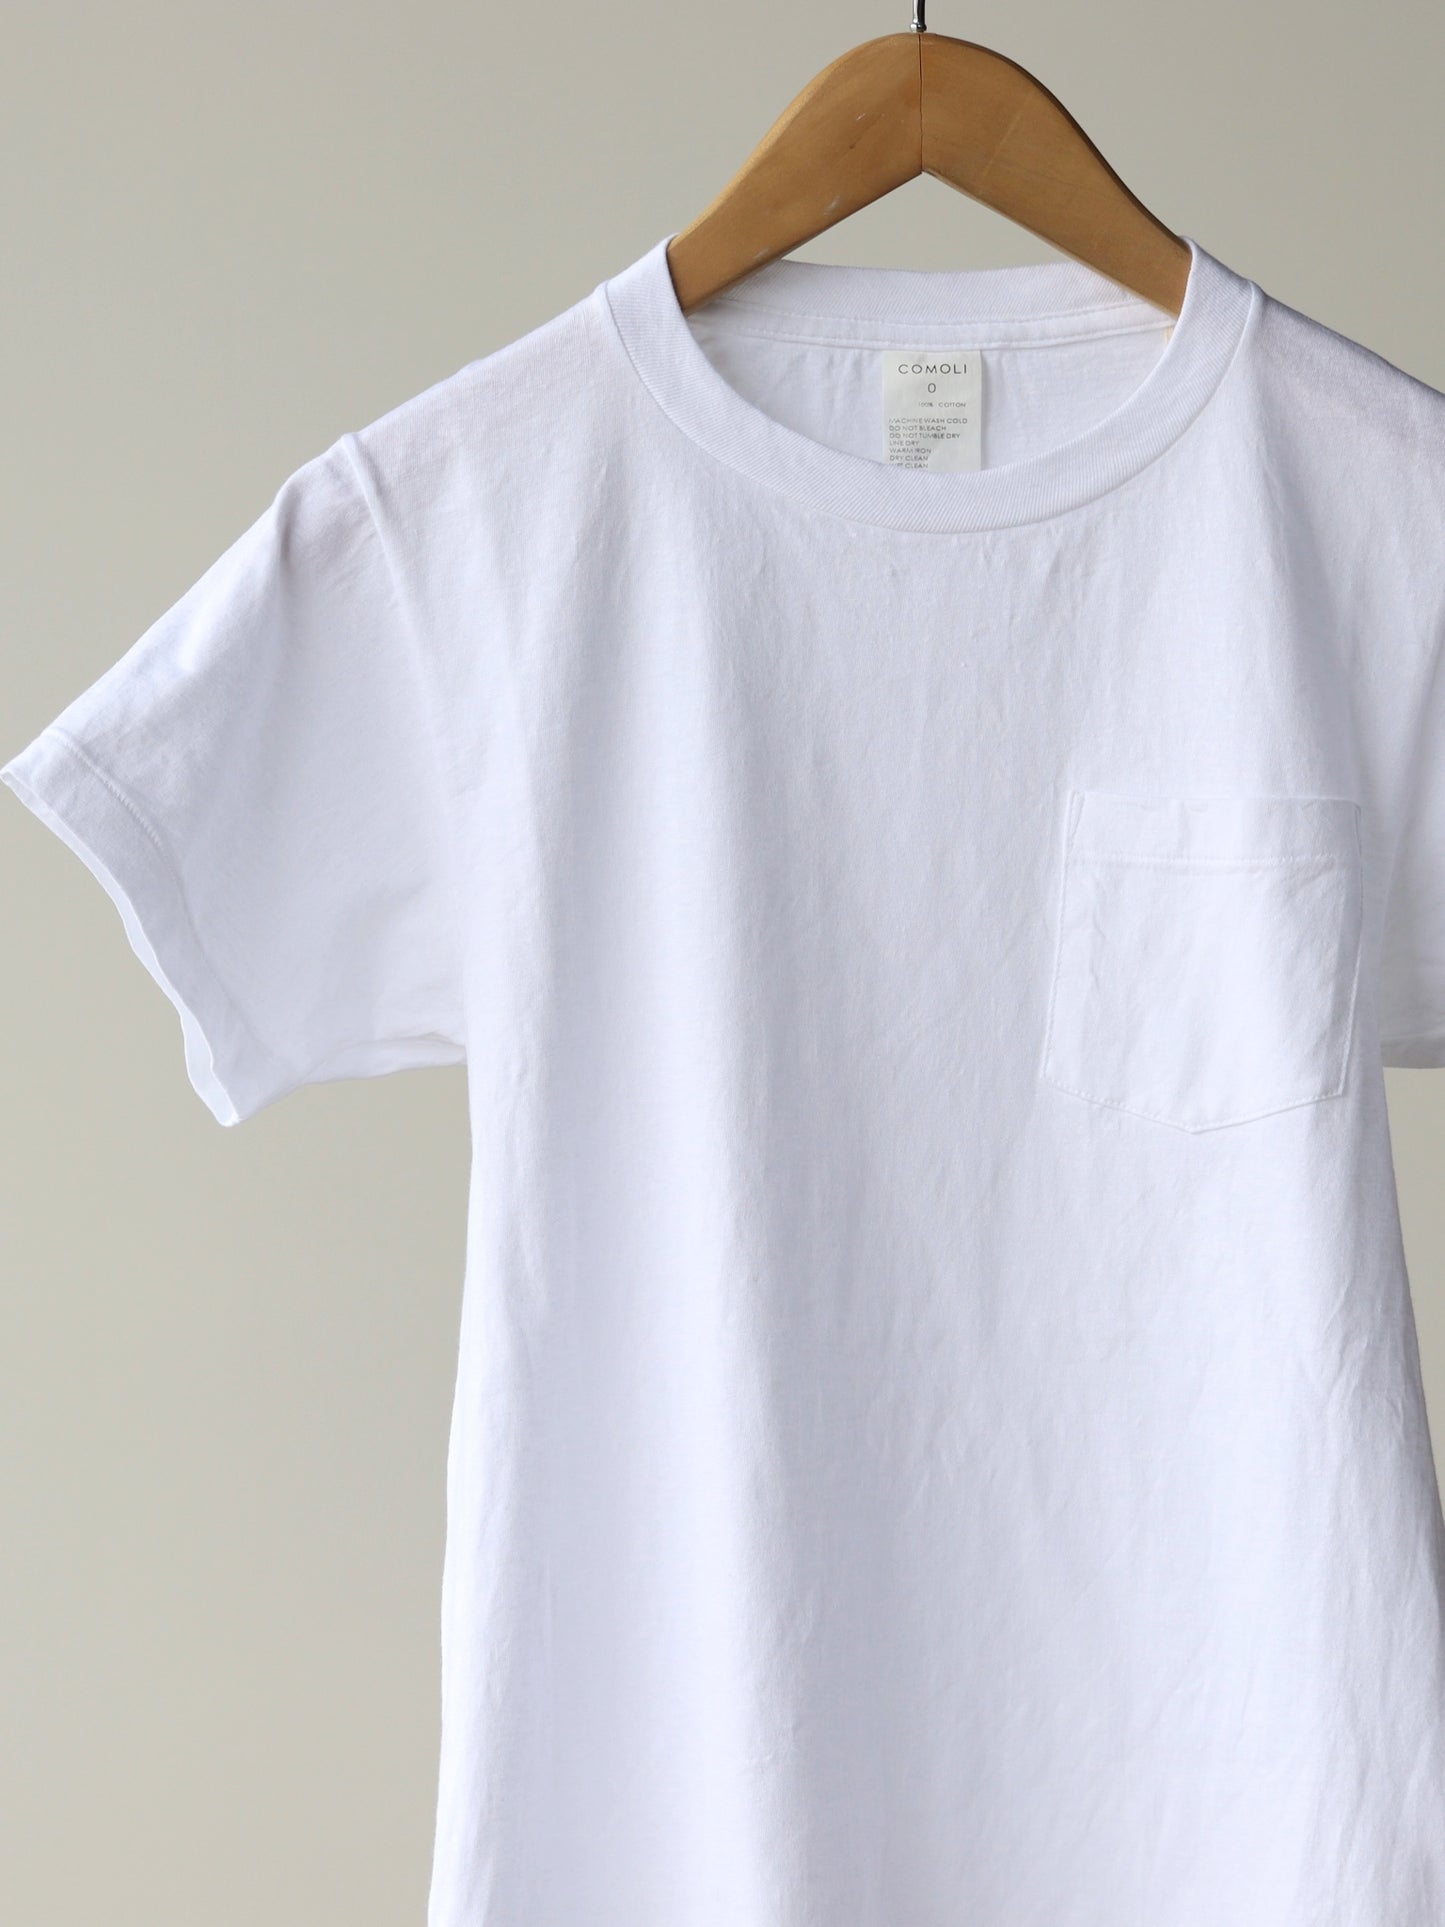 comoli-サープラス-tシャツ-white-3